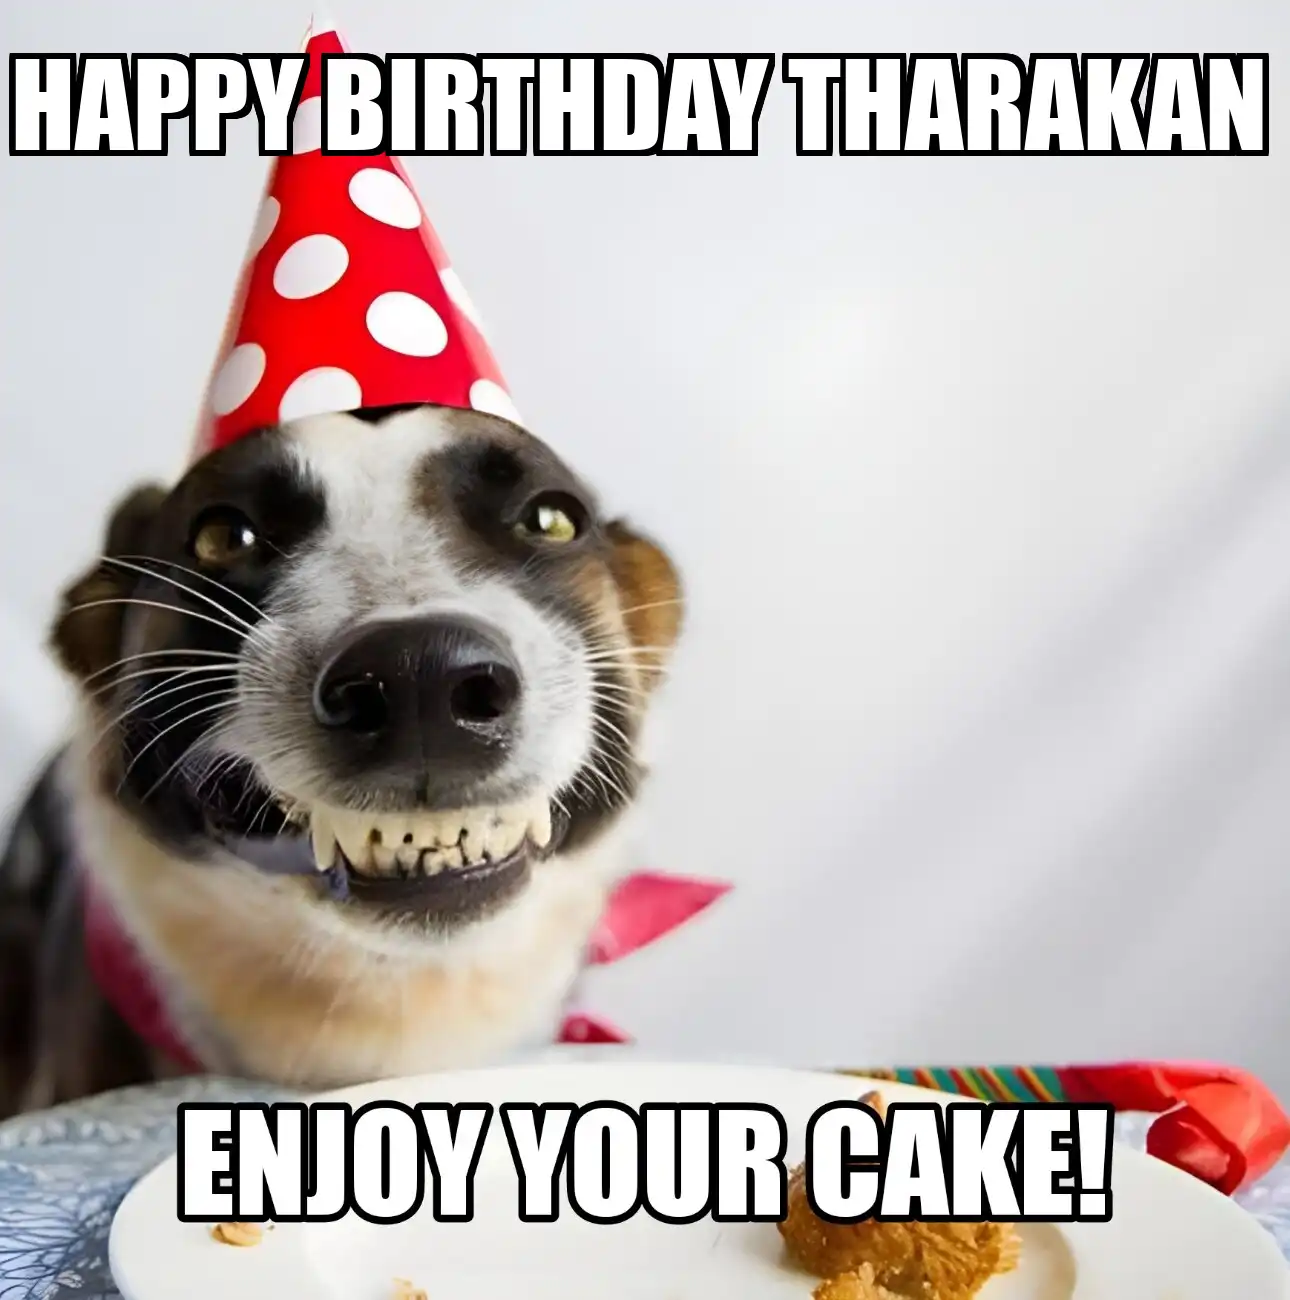 Happy Birthday Tharakan Enjoy Your Cake Dog Meme